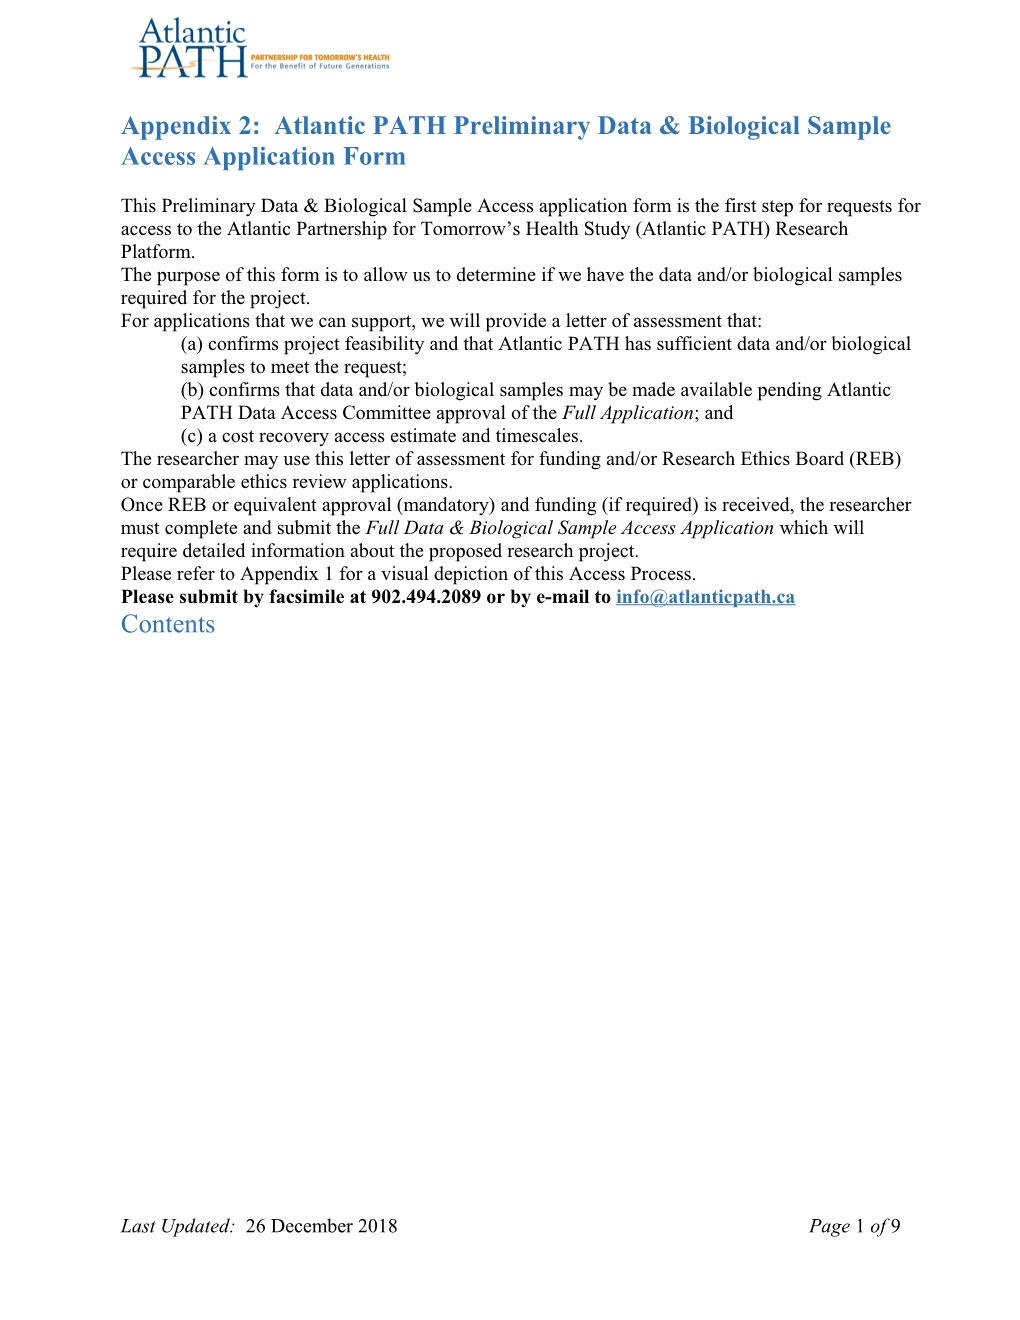 Appendix 2: Atlantic PATH Preliminary Data & Biological Sample Access Application Form